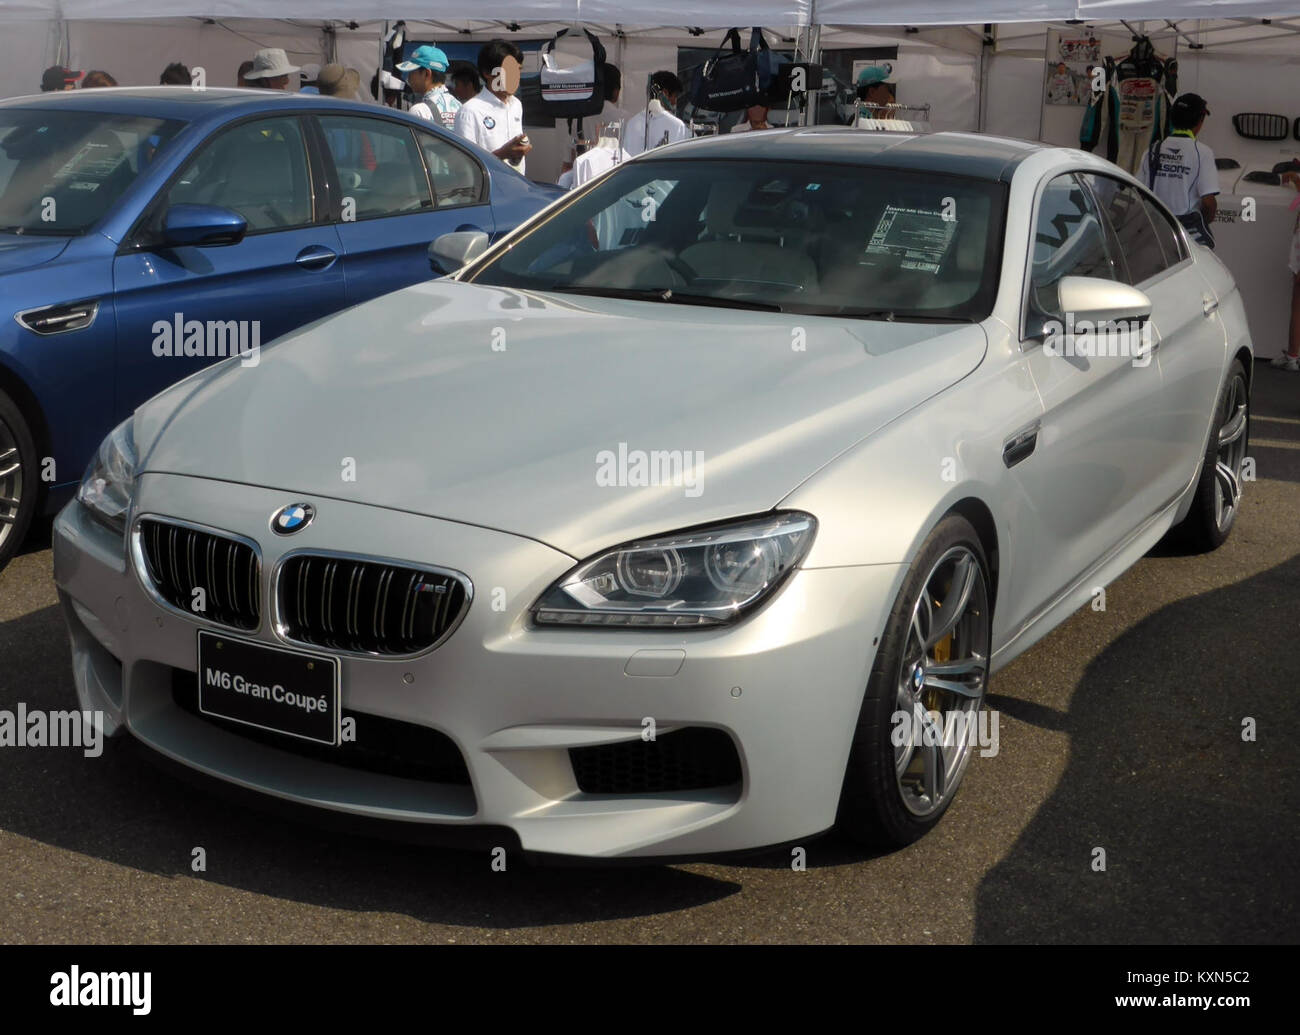 BMW M6 Gran Coupé (F06) front Stock Photo - Alamy